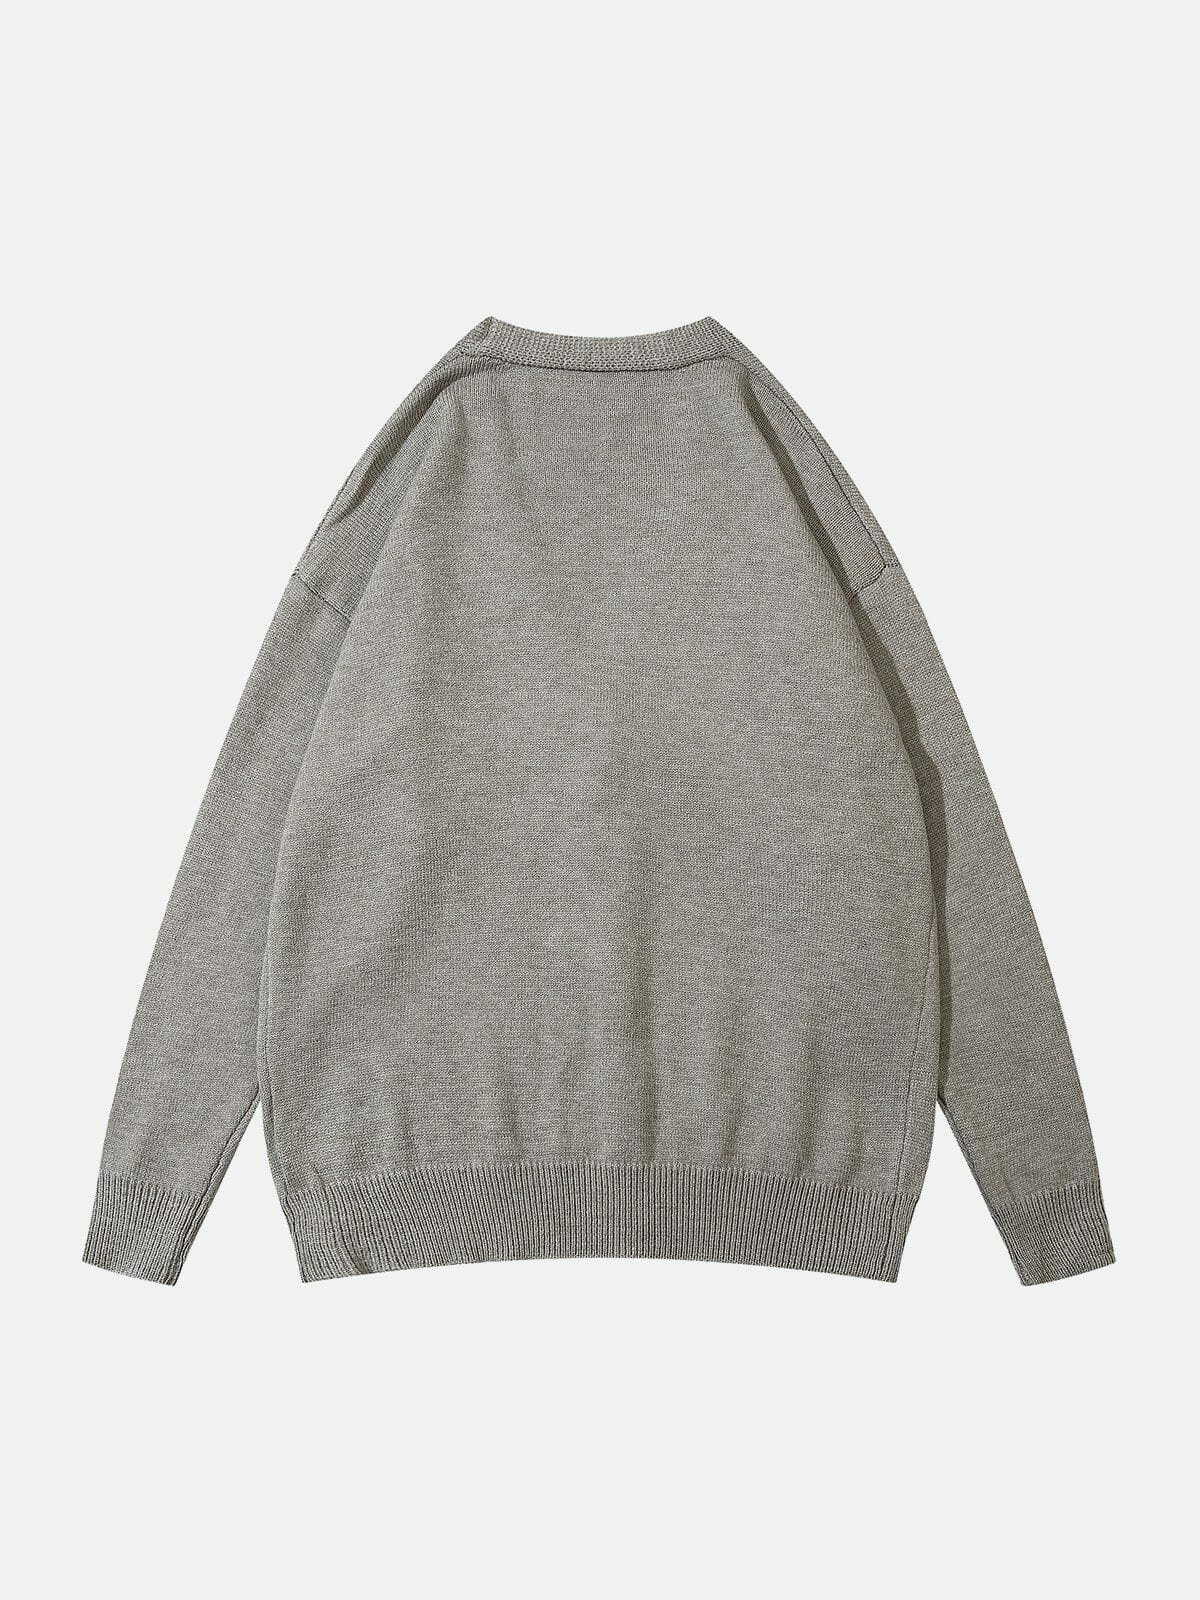 quirky knit cardigan cozy & youthful streetwear 5690